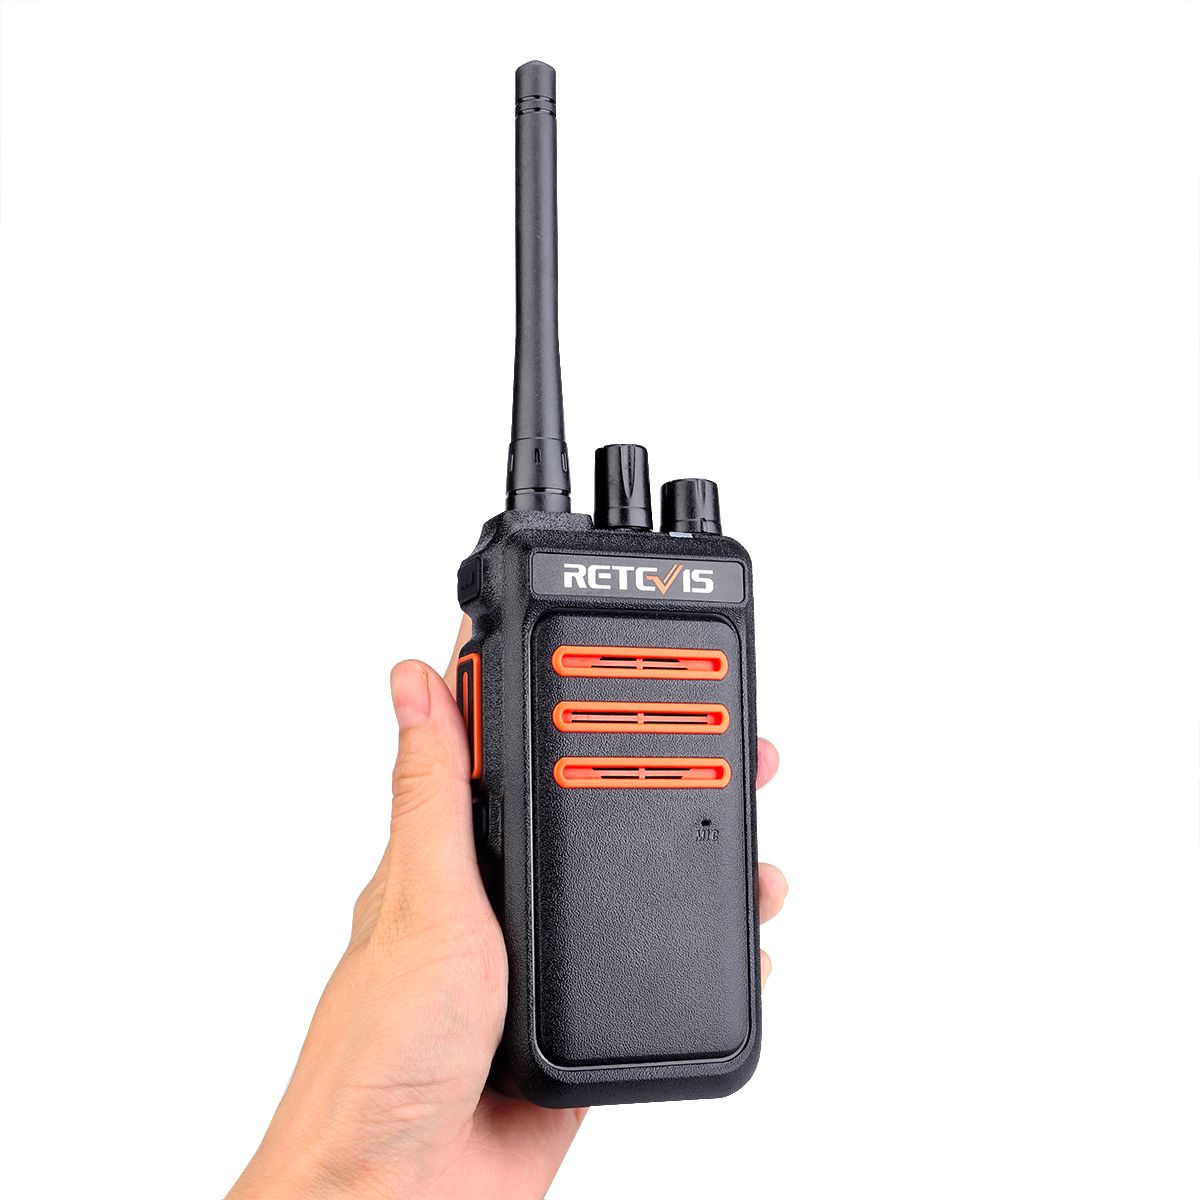 Retevis-RT76-Two-Way-Radio-Civil-Intercom-Console-5w-30-Channel-USB-Base-Walkie-Talkie-1649764